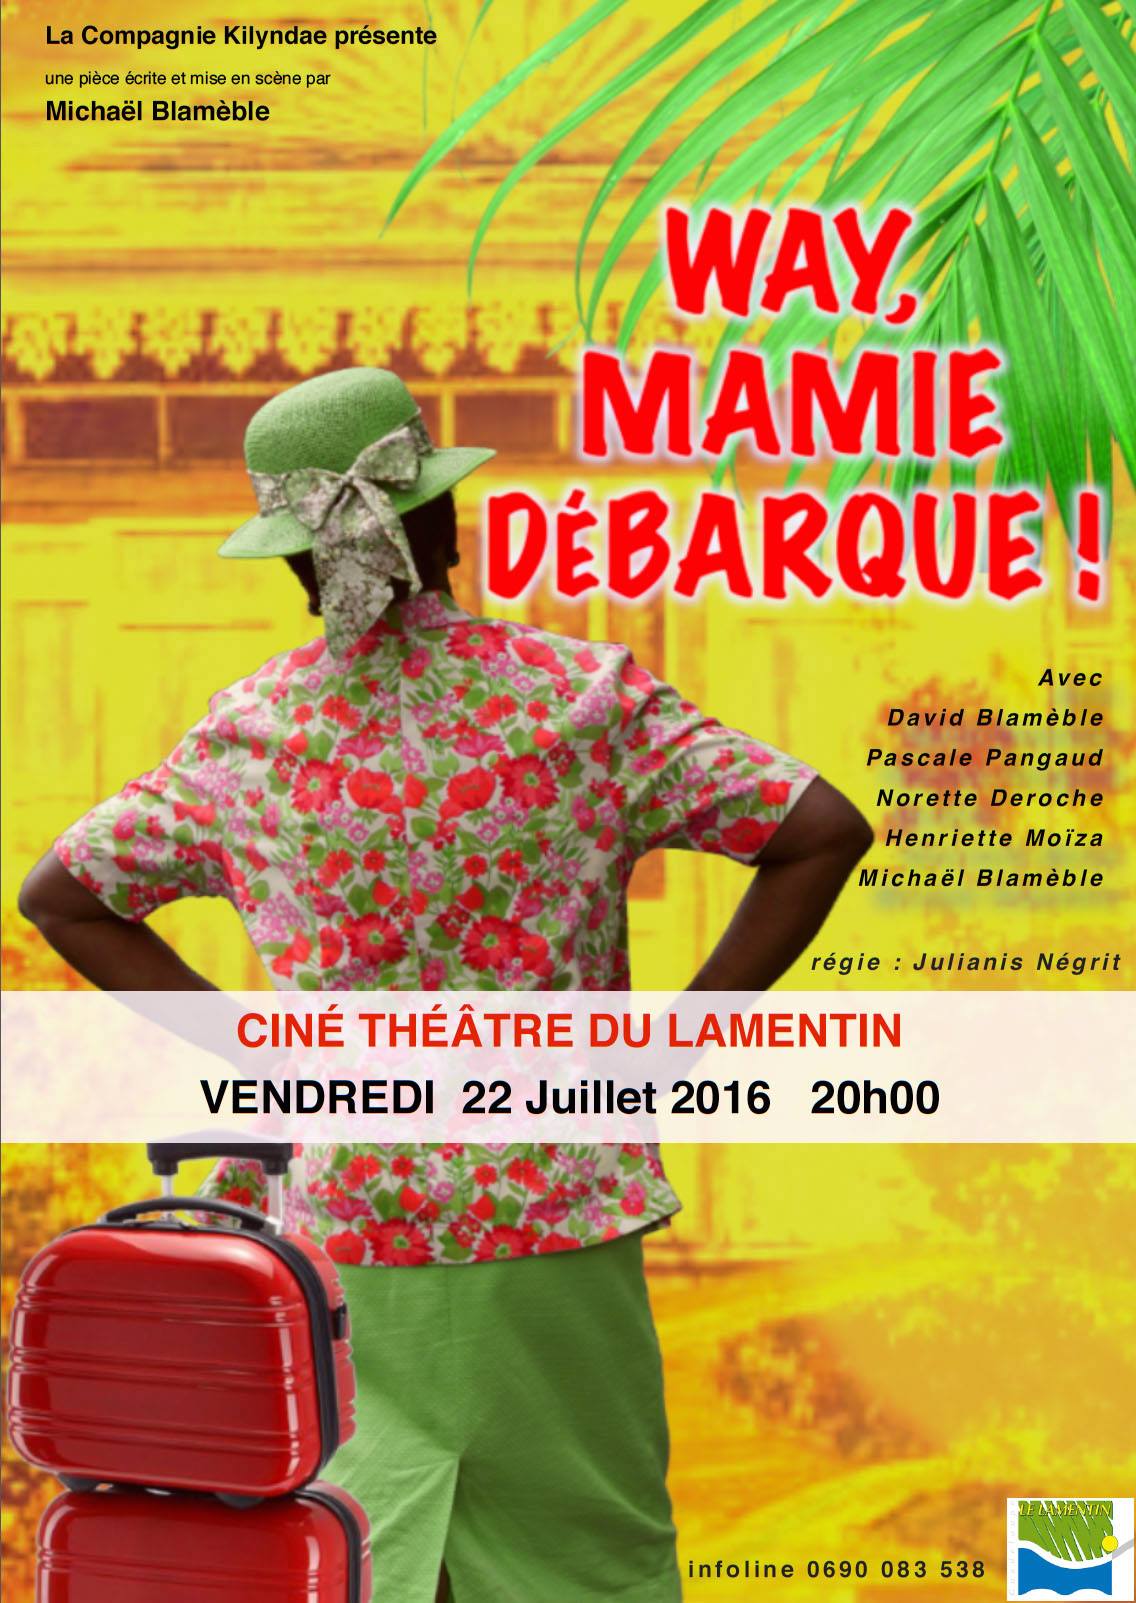 Way, Mamie Débarque ! au Lamentin – Kilyndae